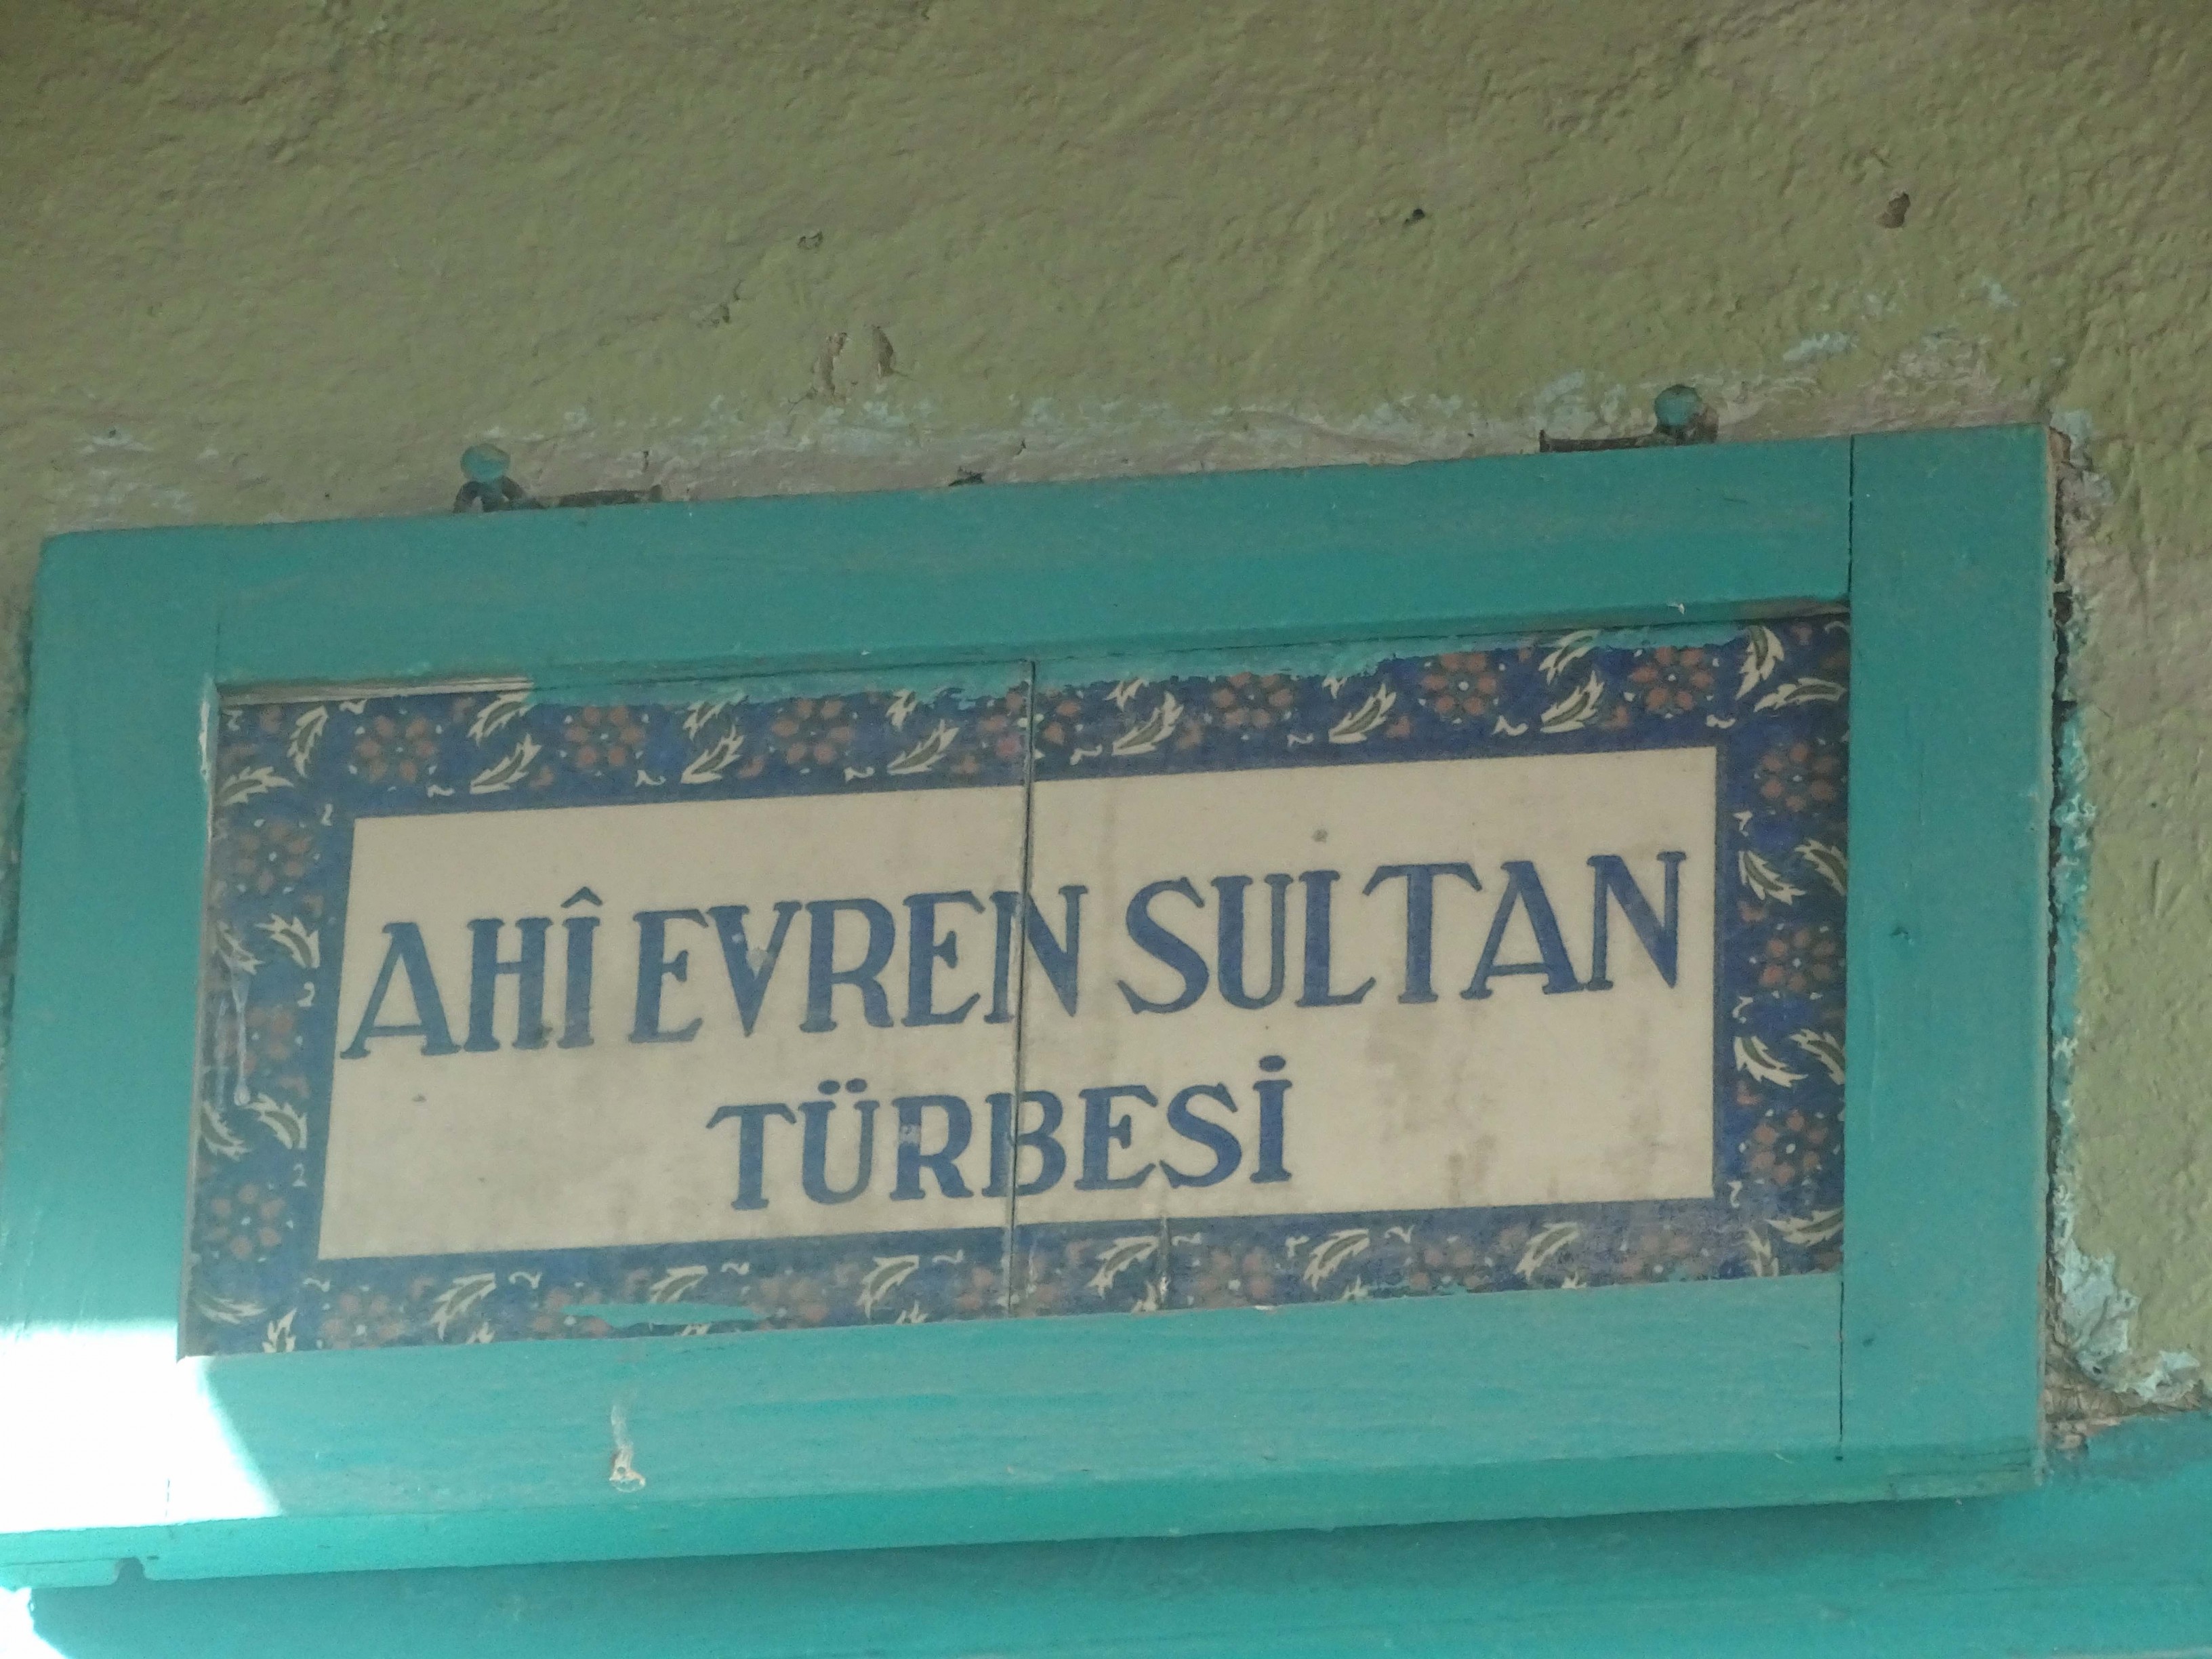 Ahi Evran Sultan